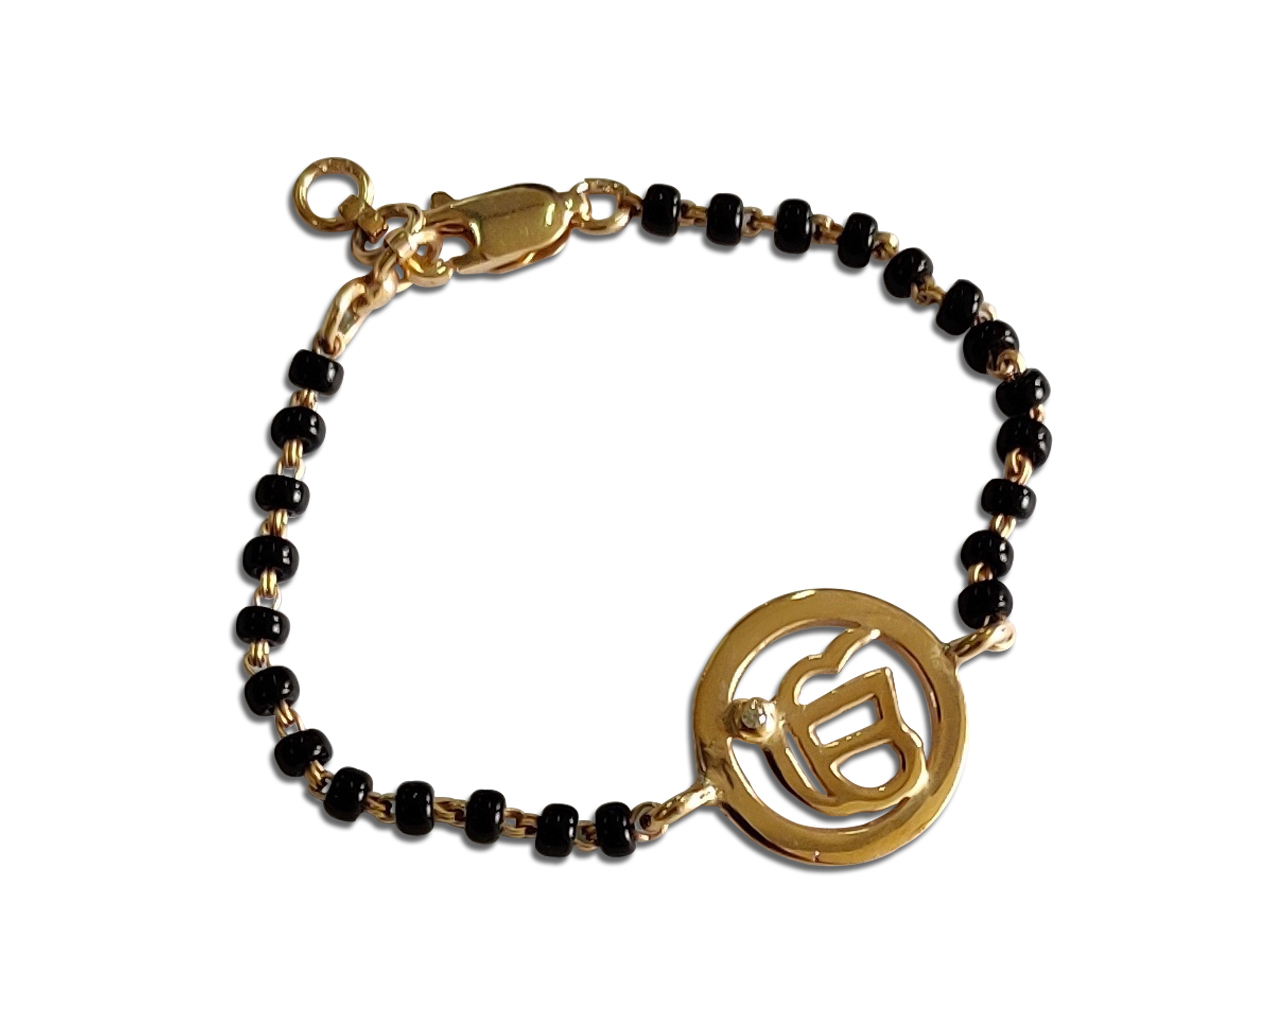 Buy Mikado New Graceful Bracelet For Women at Amazon.in